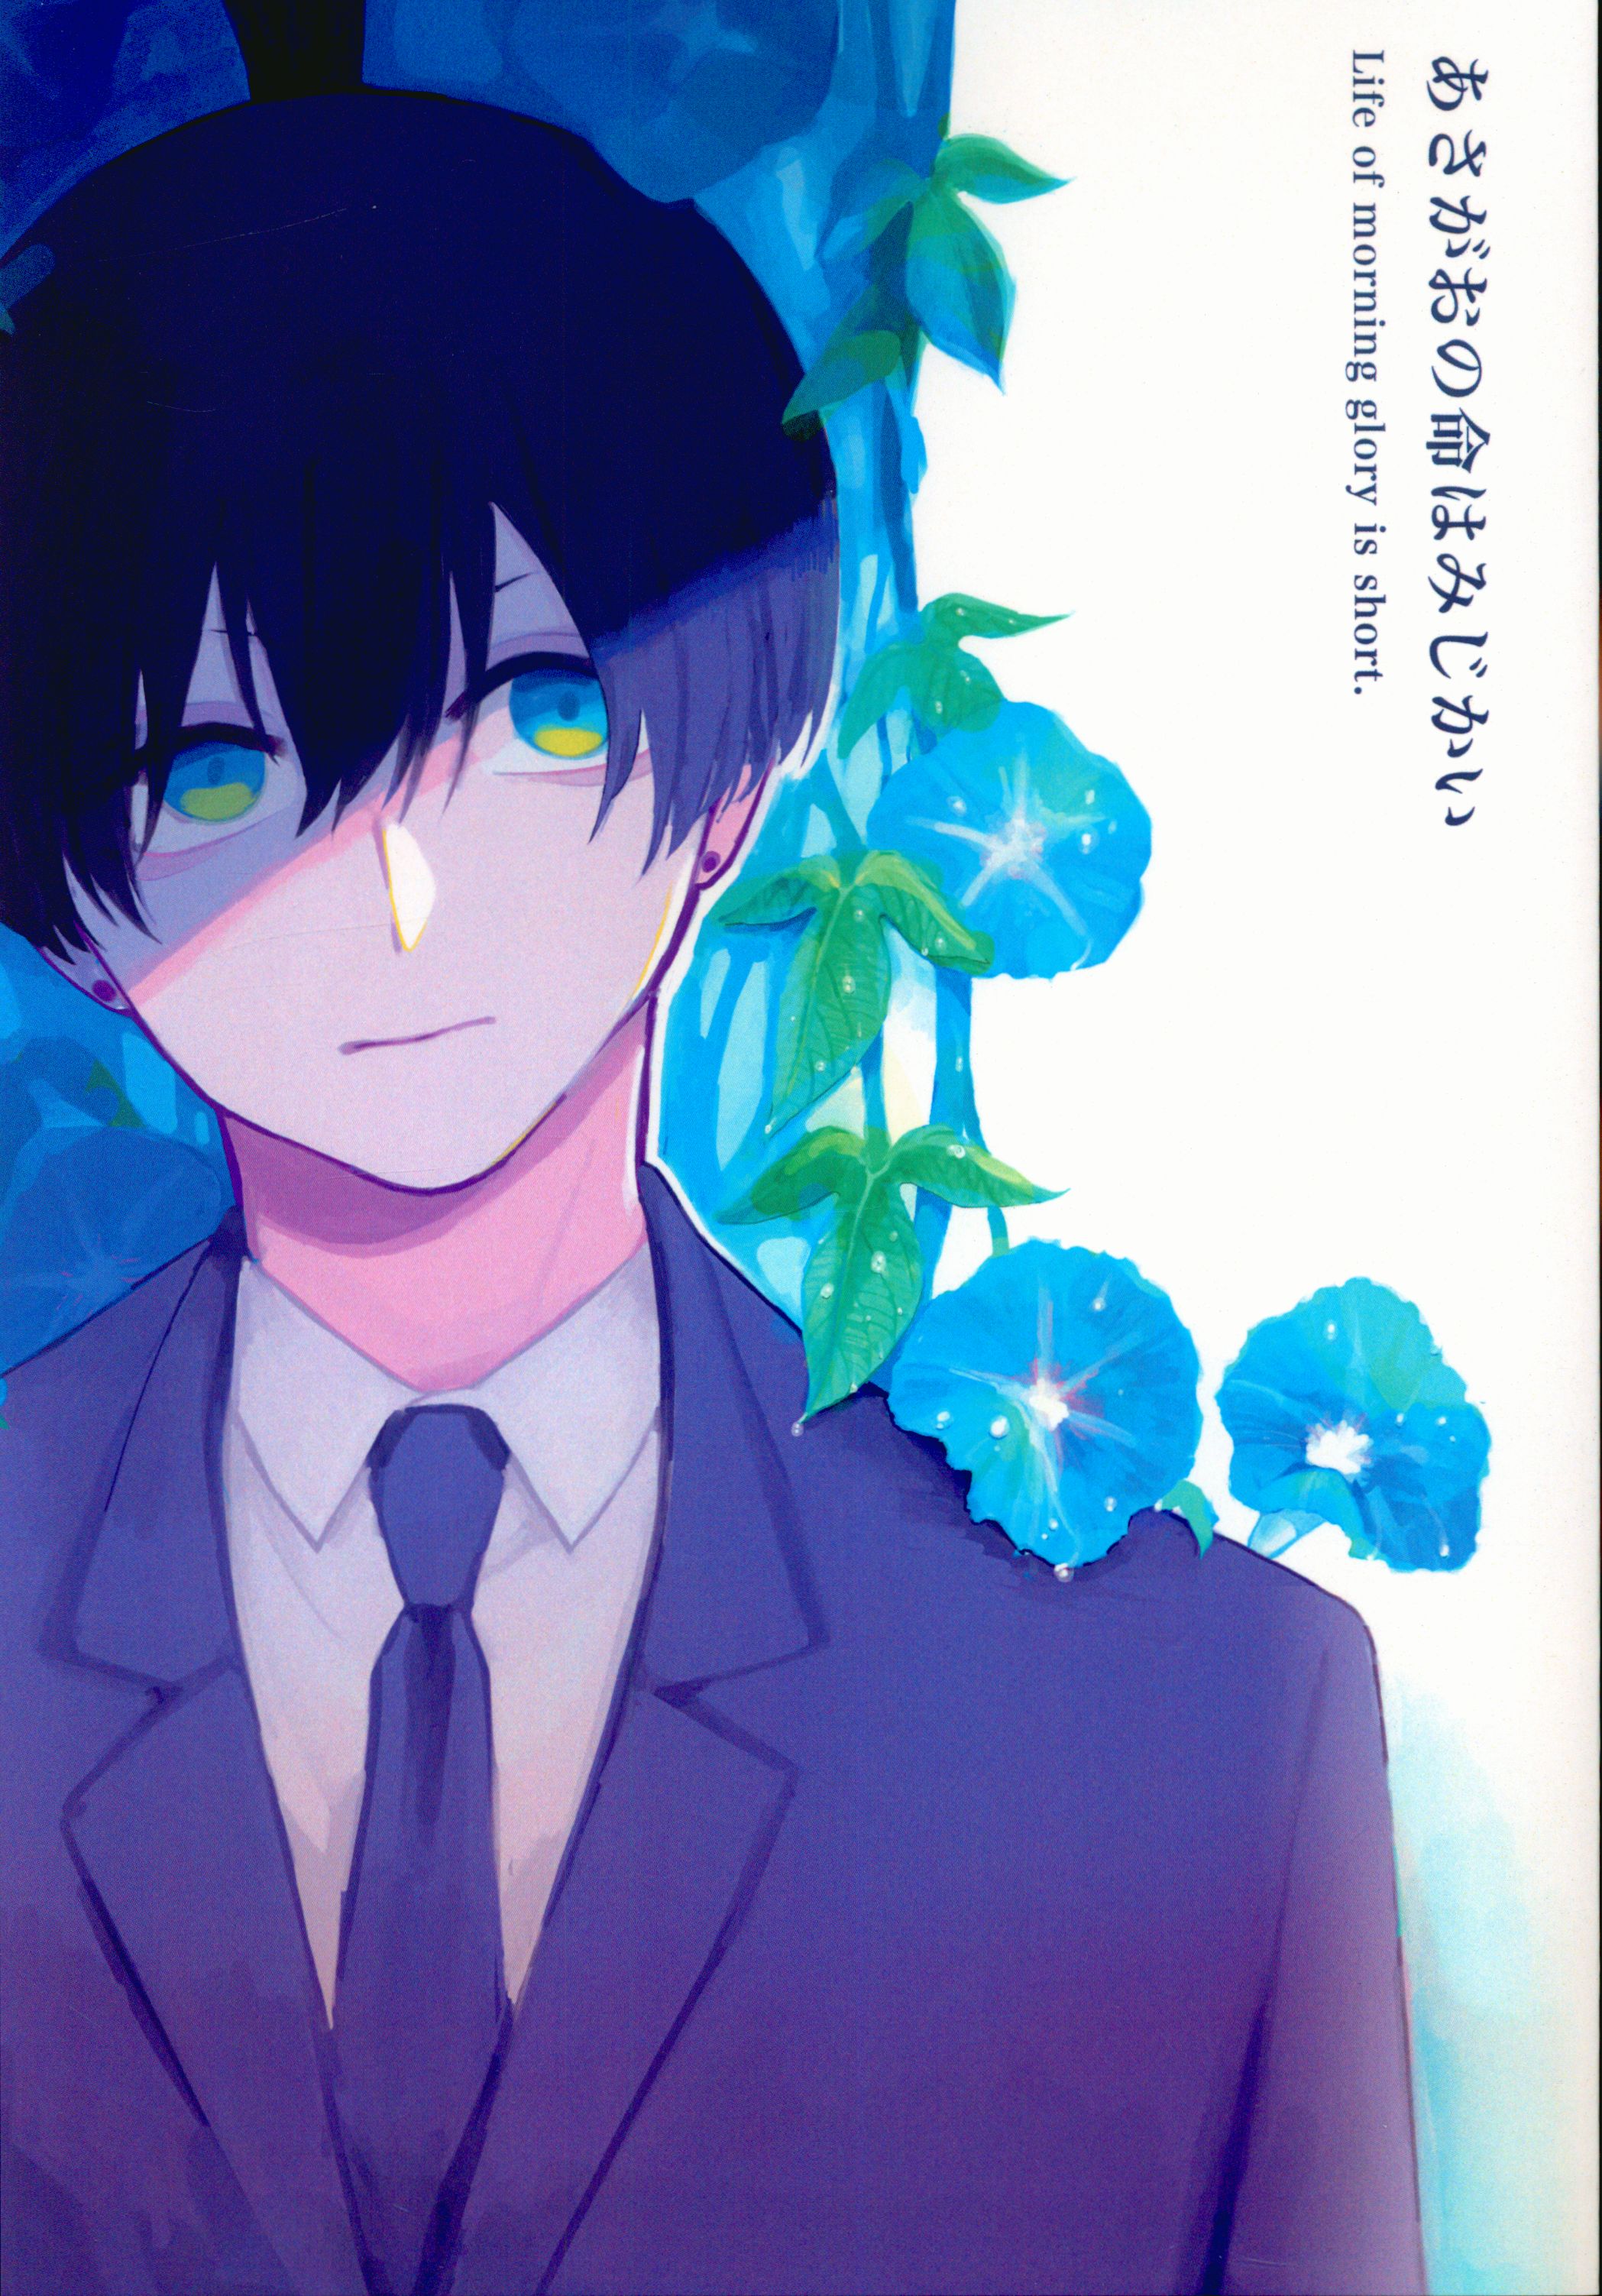 1 [WT!] Kase-san and the Morning Glory - A lesbian romance bildungsroman :  r/anime